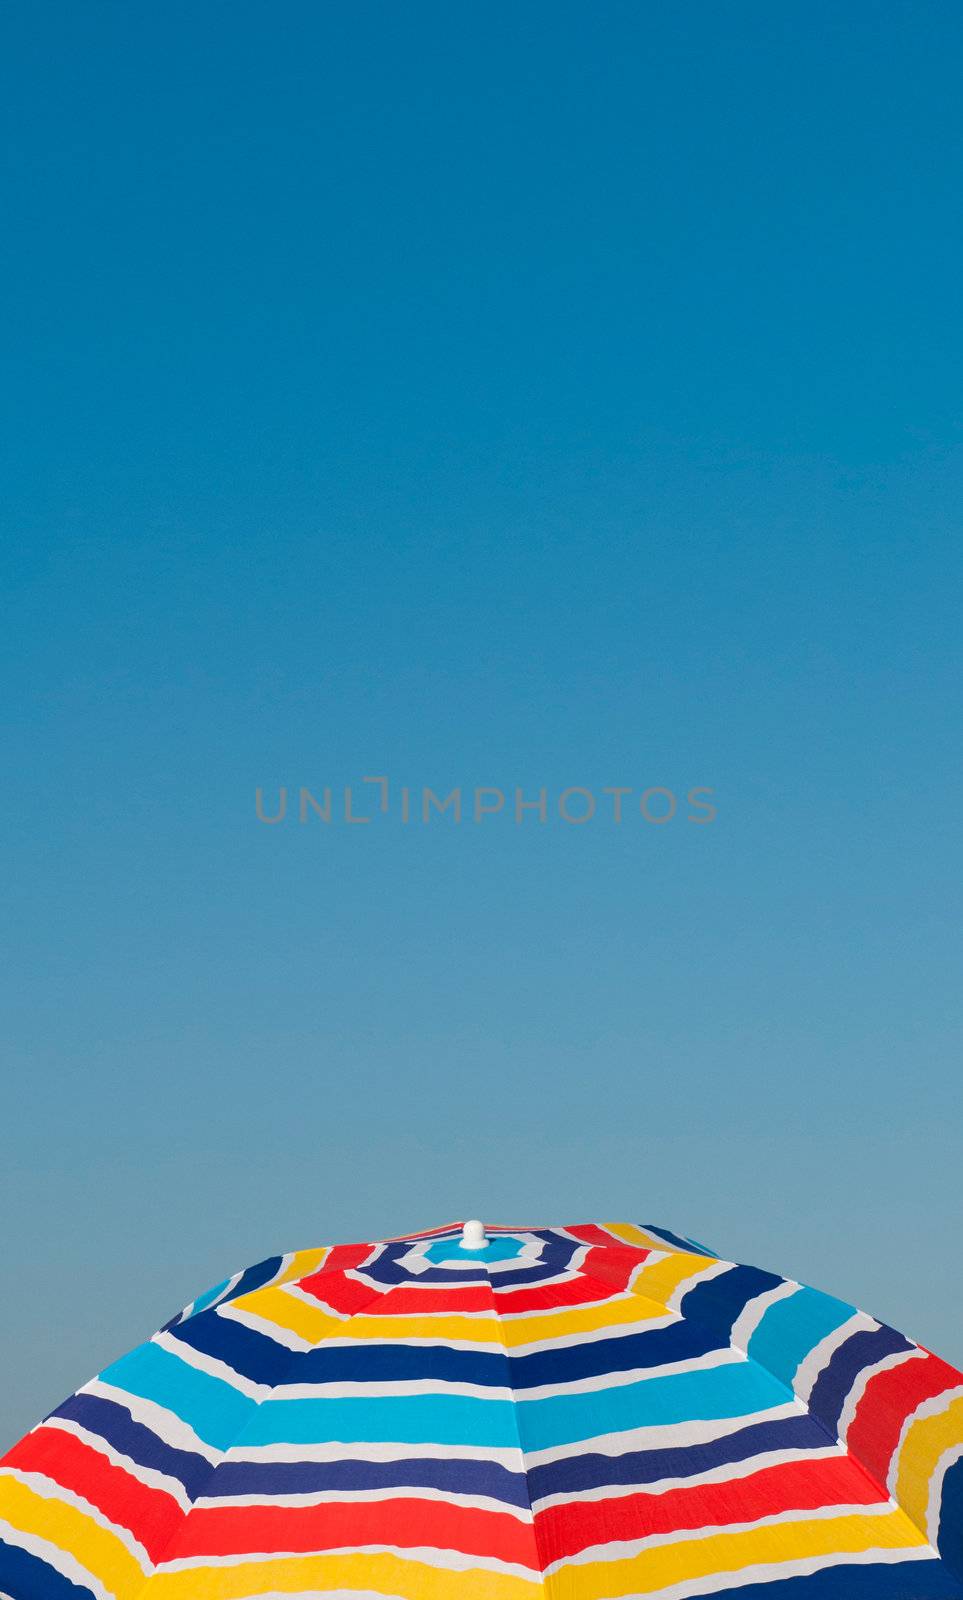 Beach umbrella by luissantos84